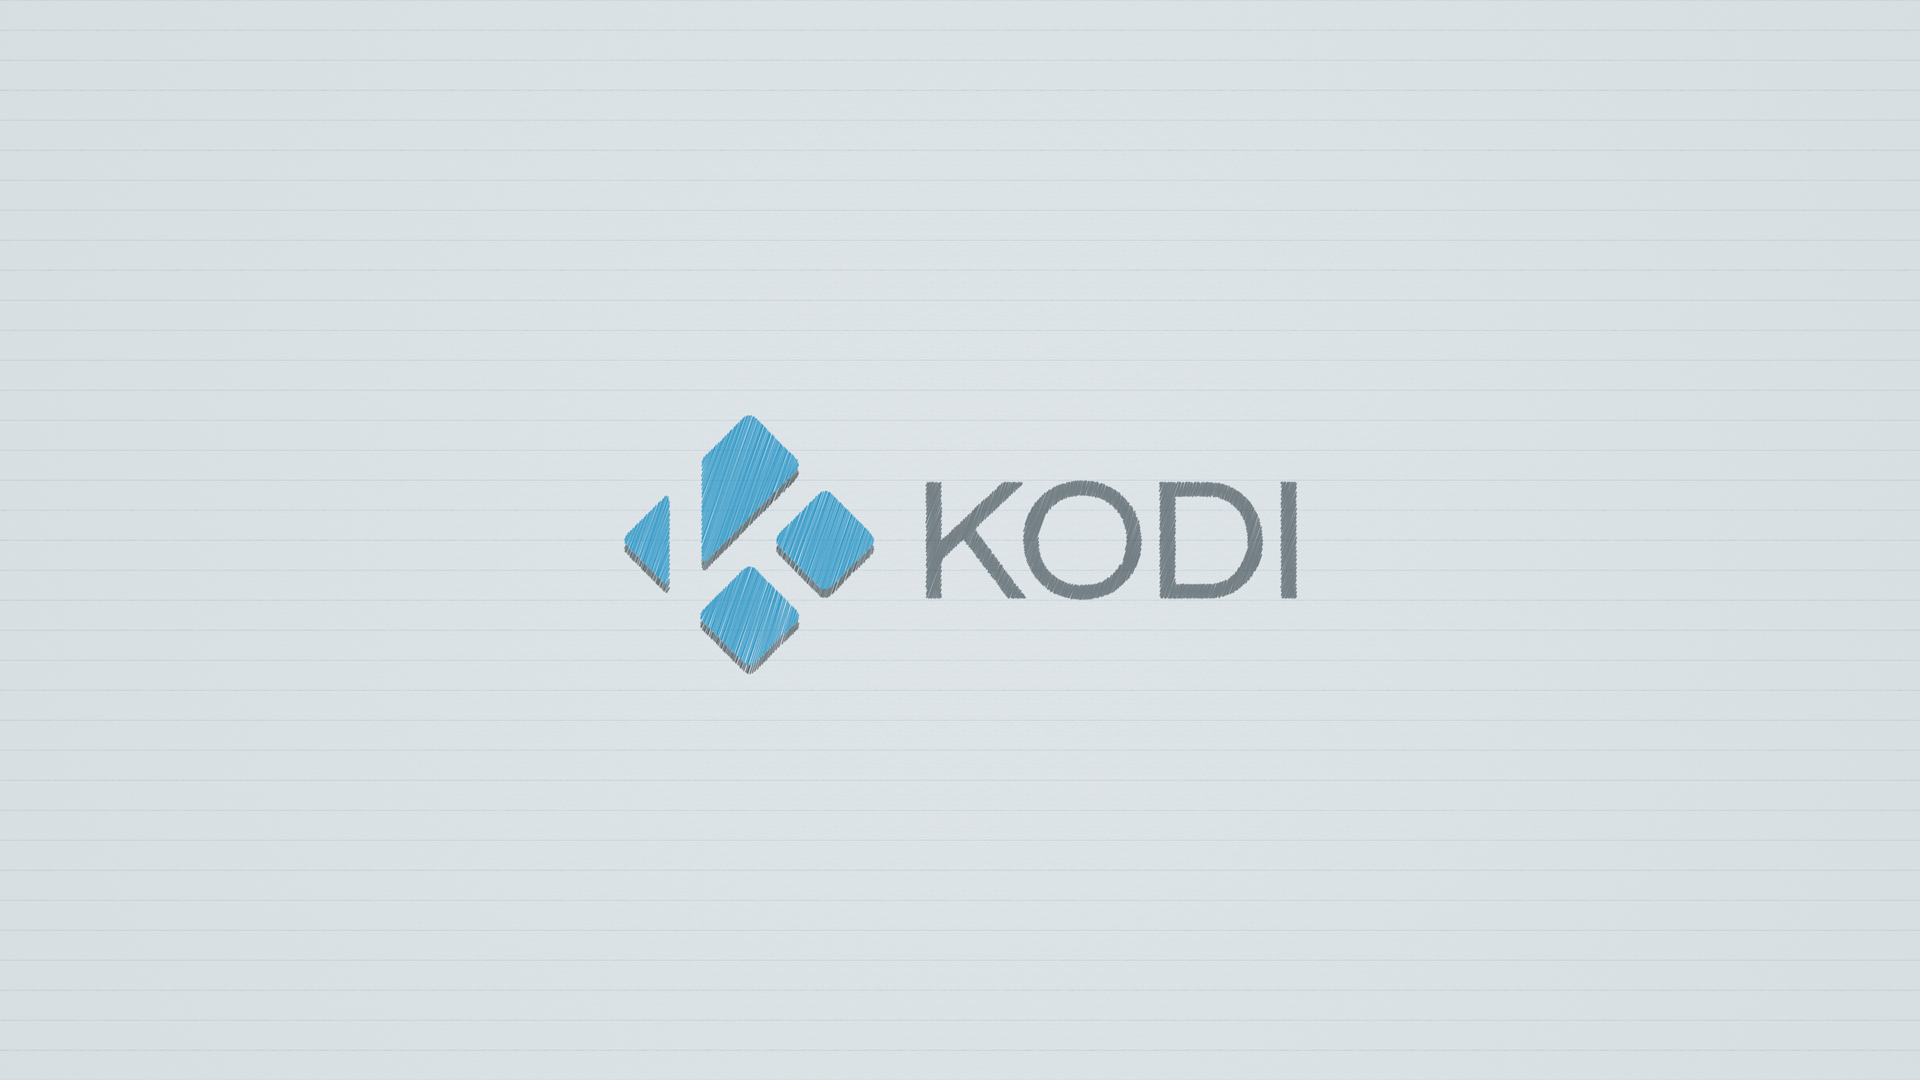 File:Kodi-Wallpaper-8B-1080p samfisher.jpg